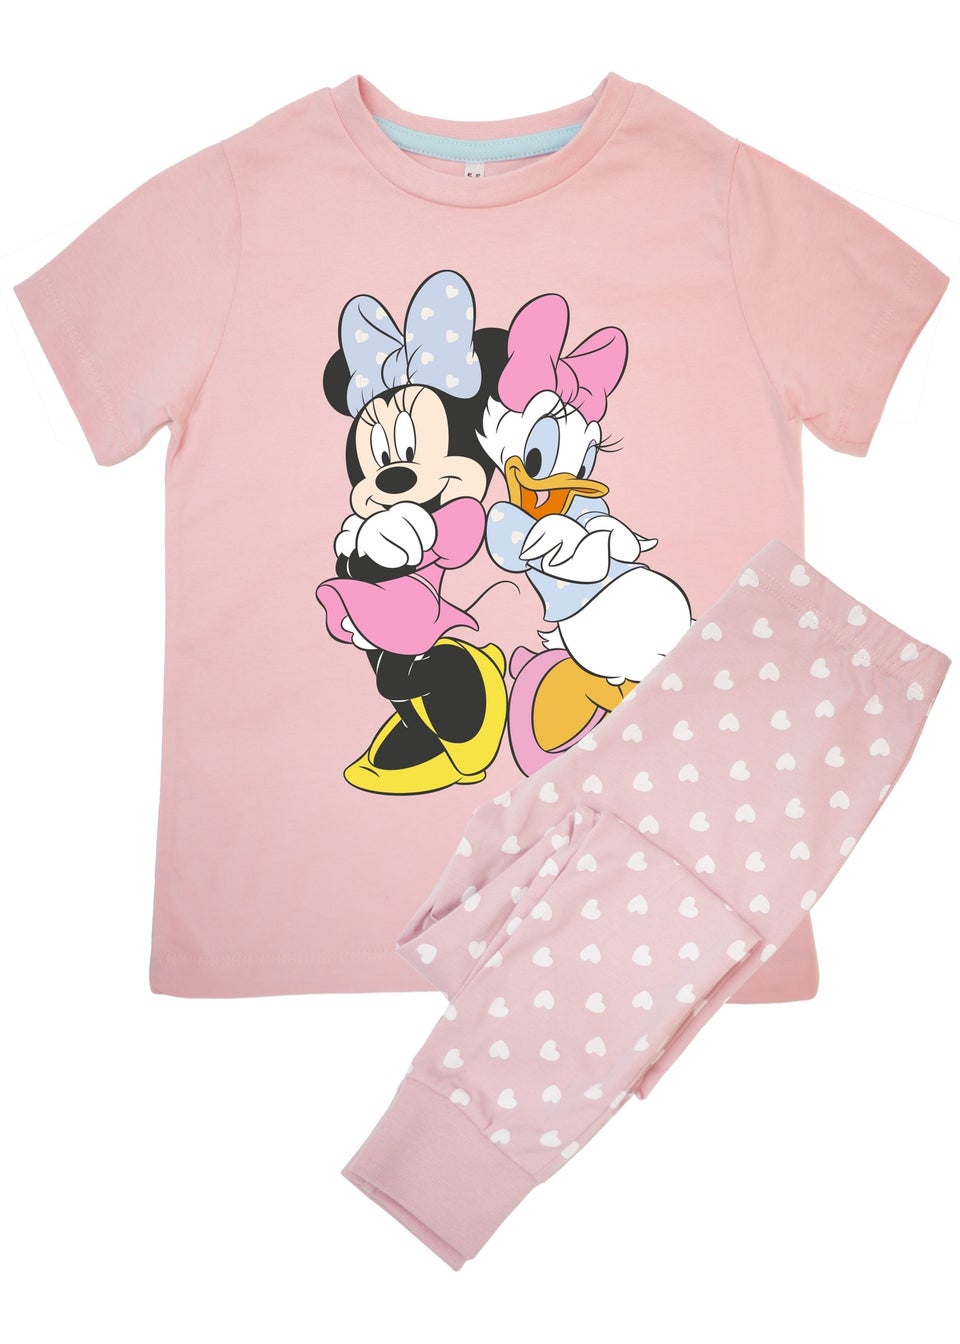 Disney Minnie Mouse With Daisy Pose Kids Baby Pink Hearts Pyjamas (3-8 Years)